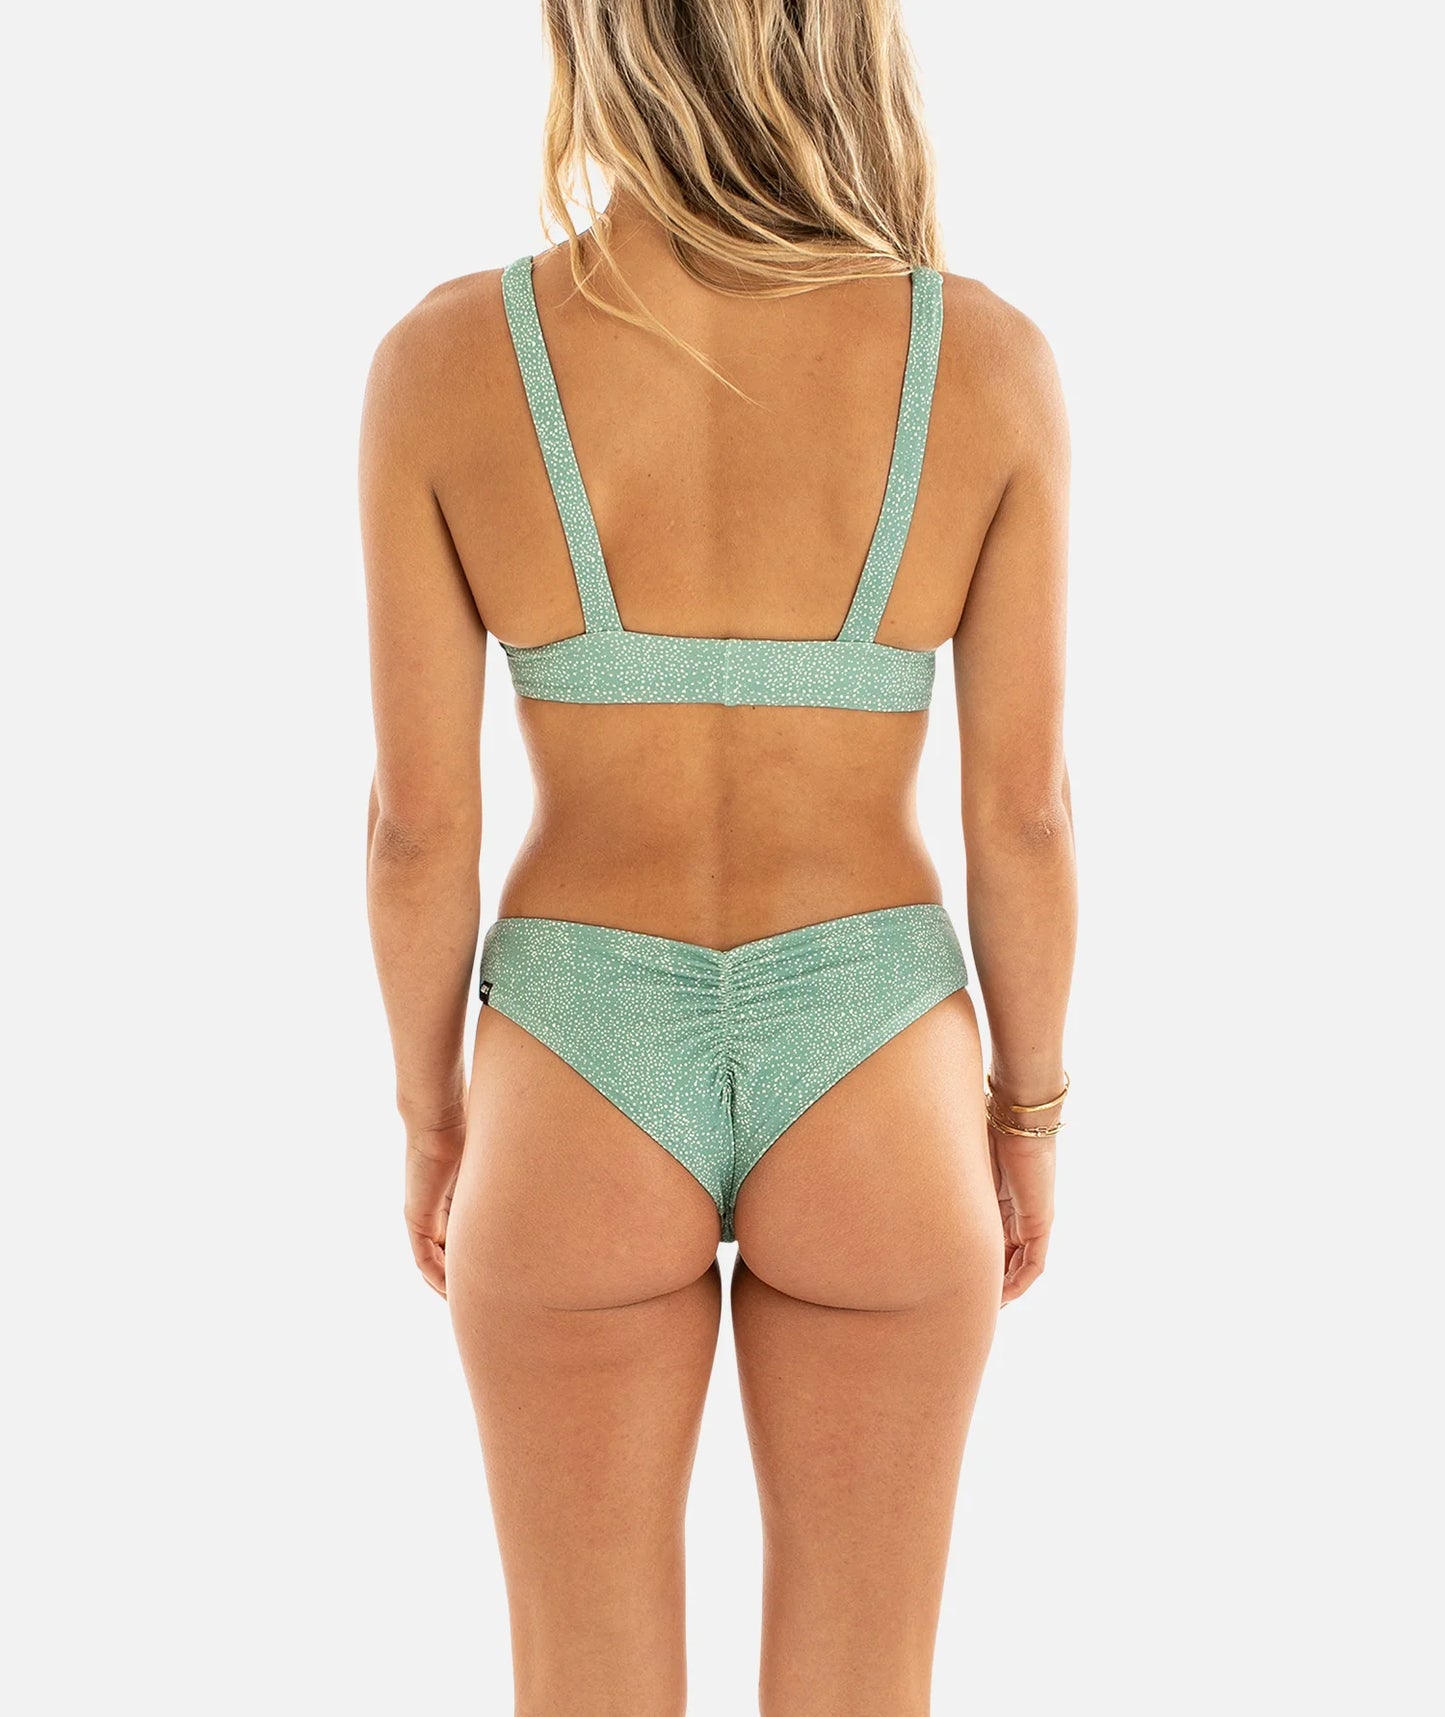 Jetty Justine Bikini Bottom - Green - Back View